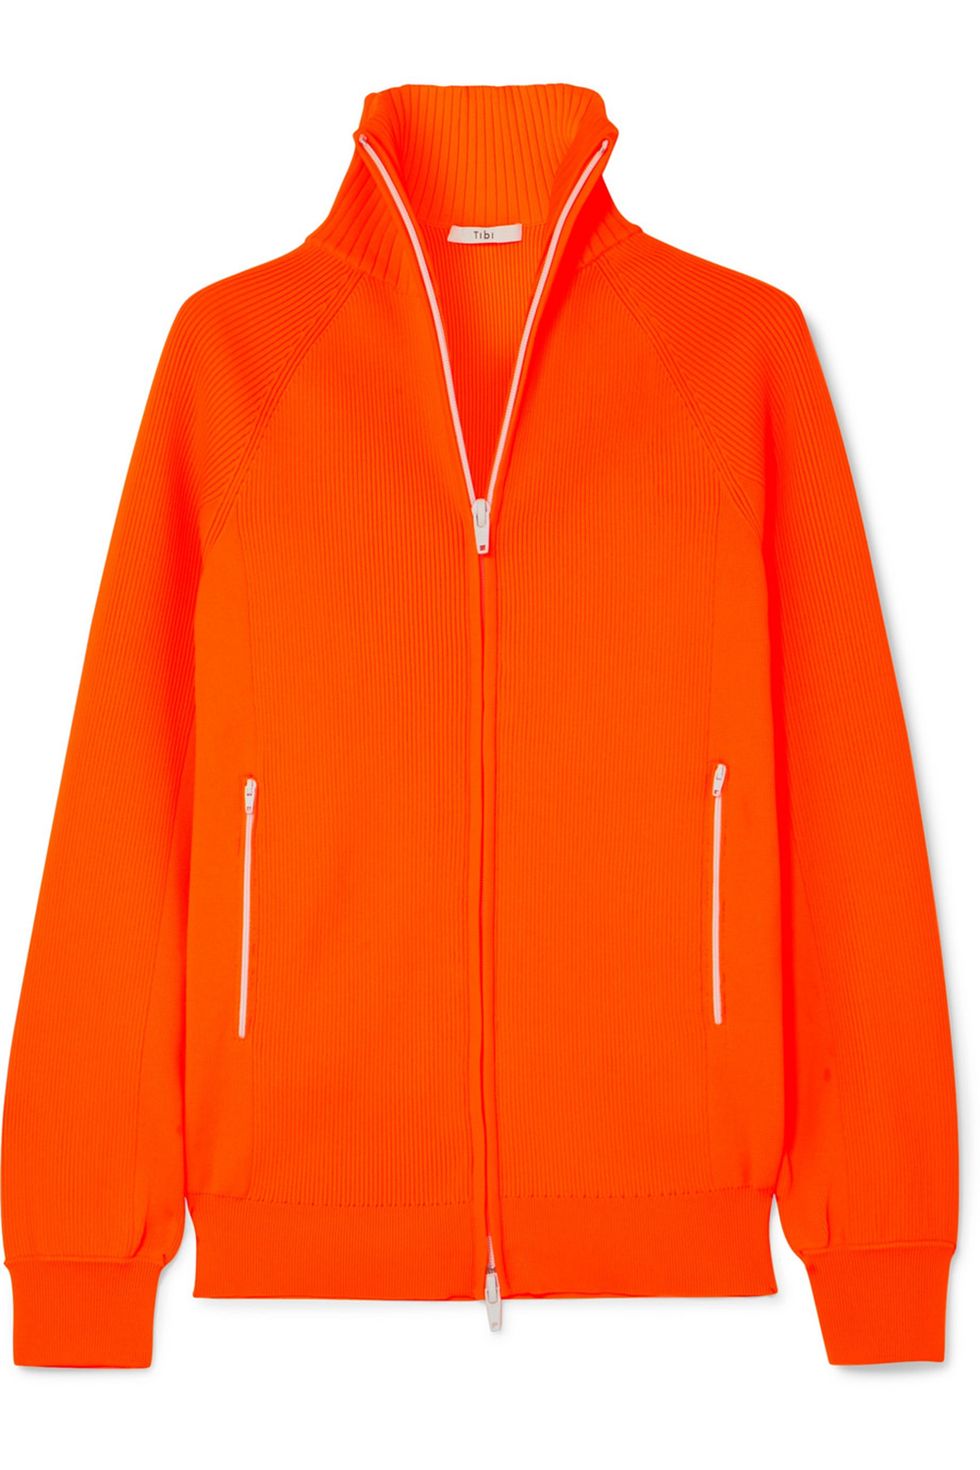 Clothing, Orange, Outerwear, Jacket, Sleeve, Polar fleece, Zipper, High-visibility clothing, Sweatshirt, Hood, 